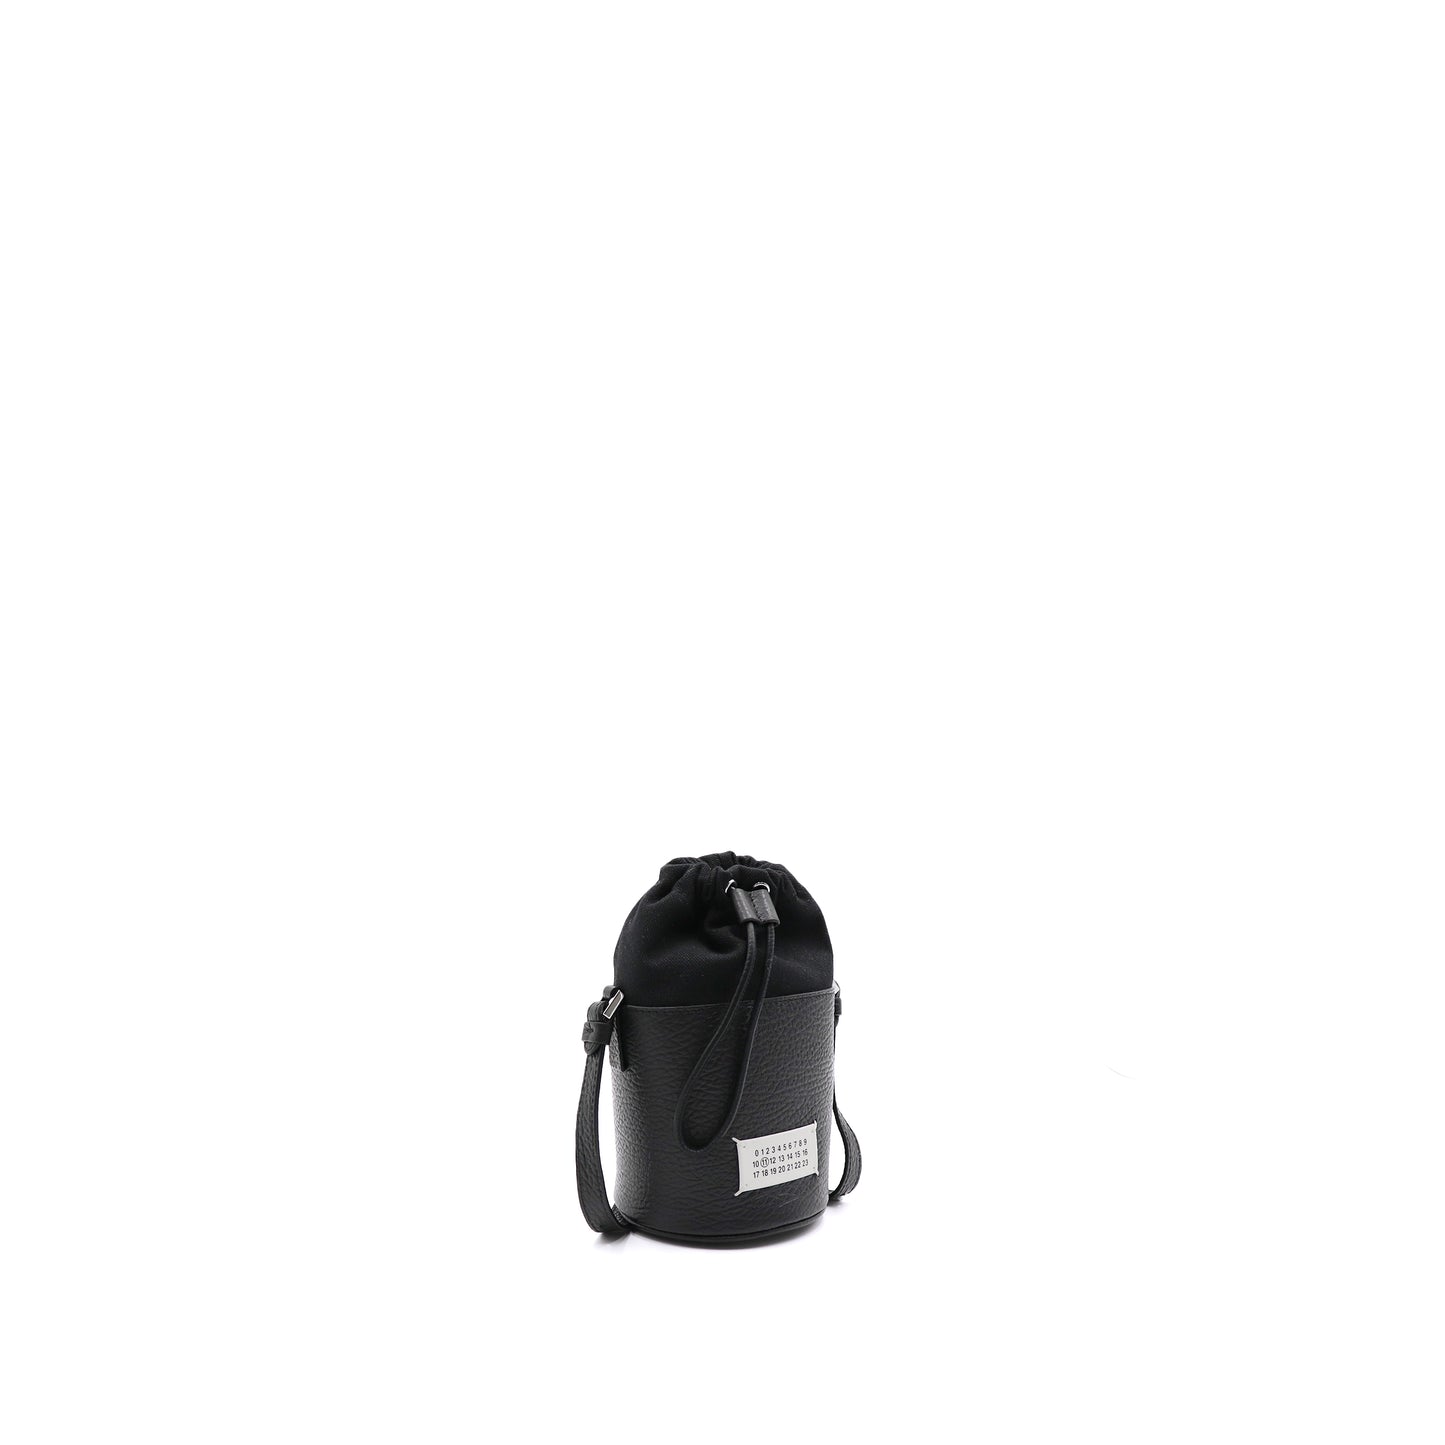 Mini 5AC Bucket Bag in Black